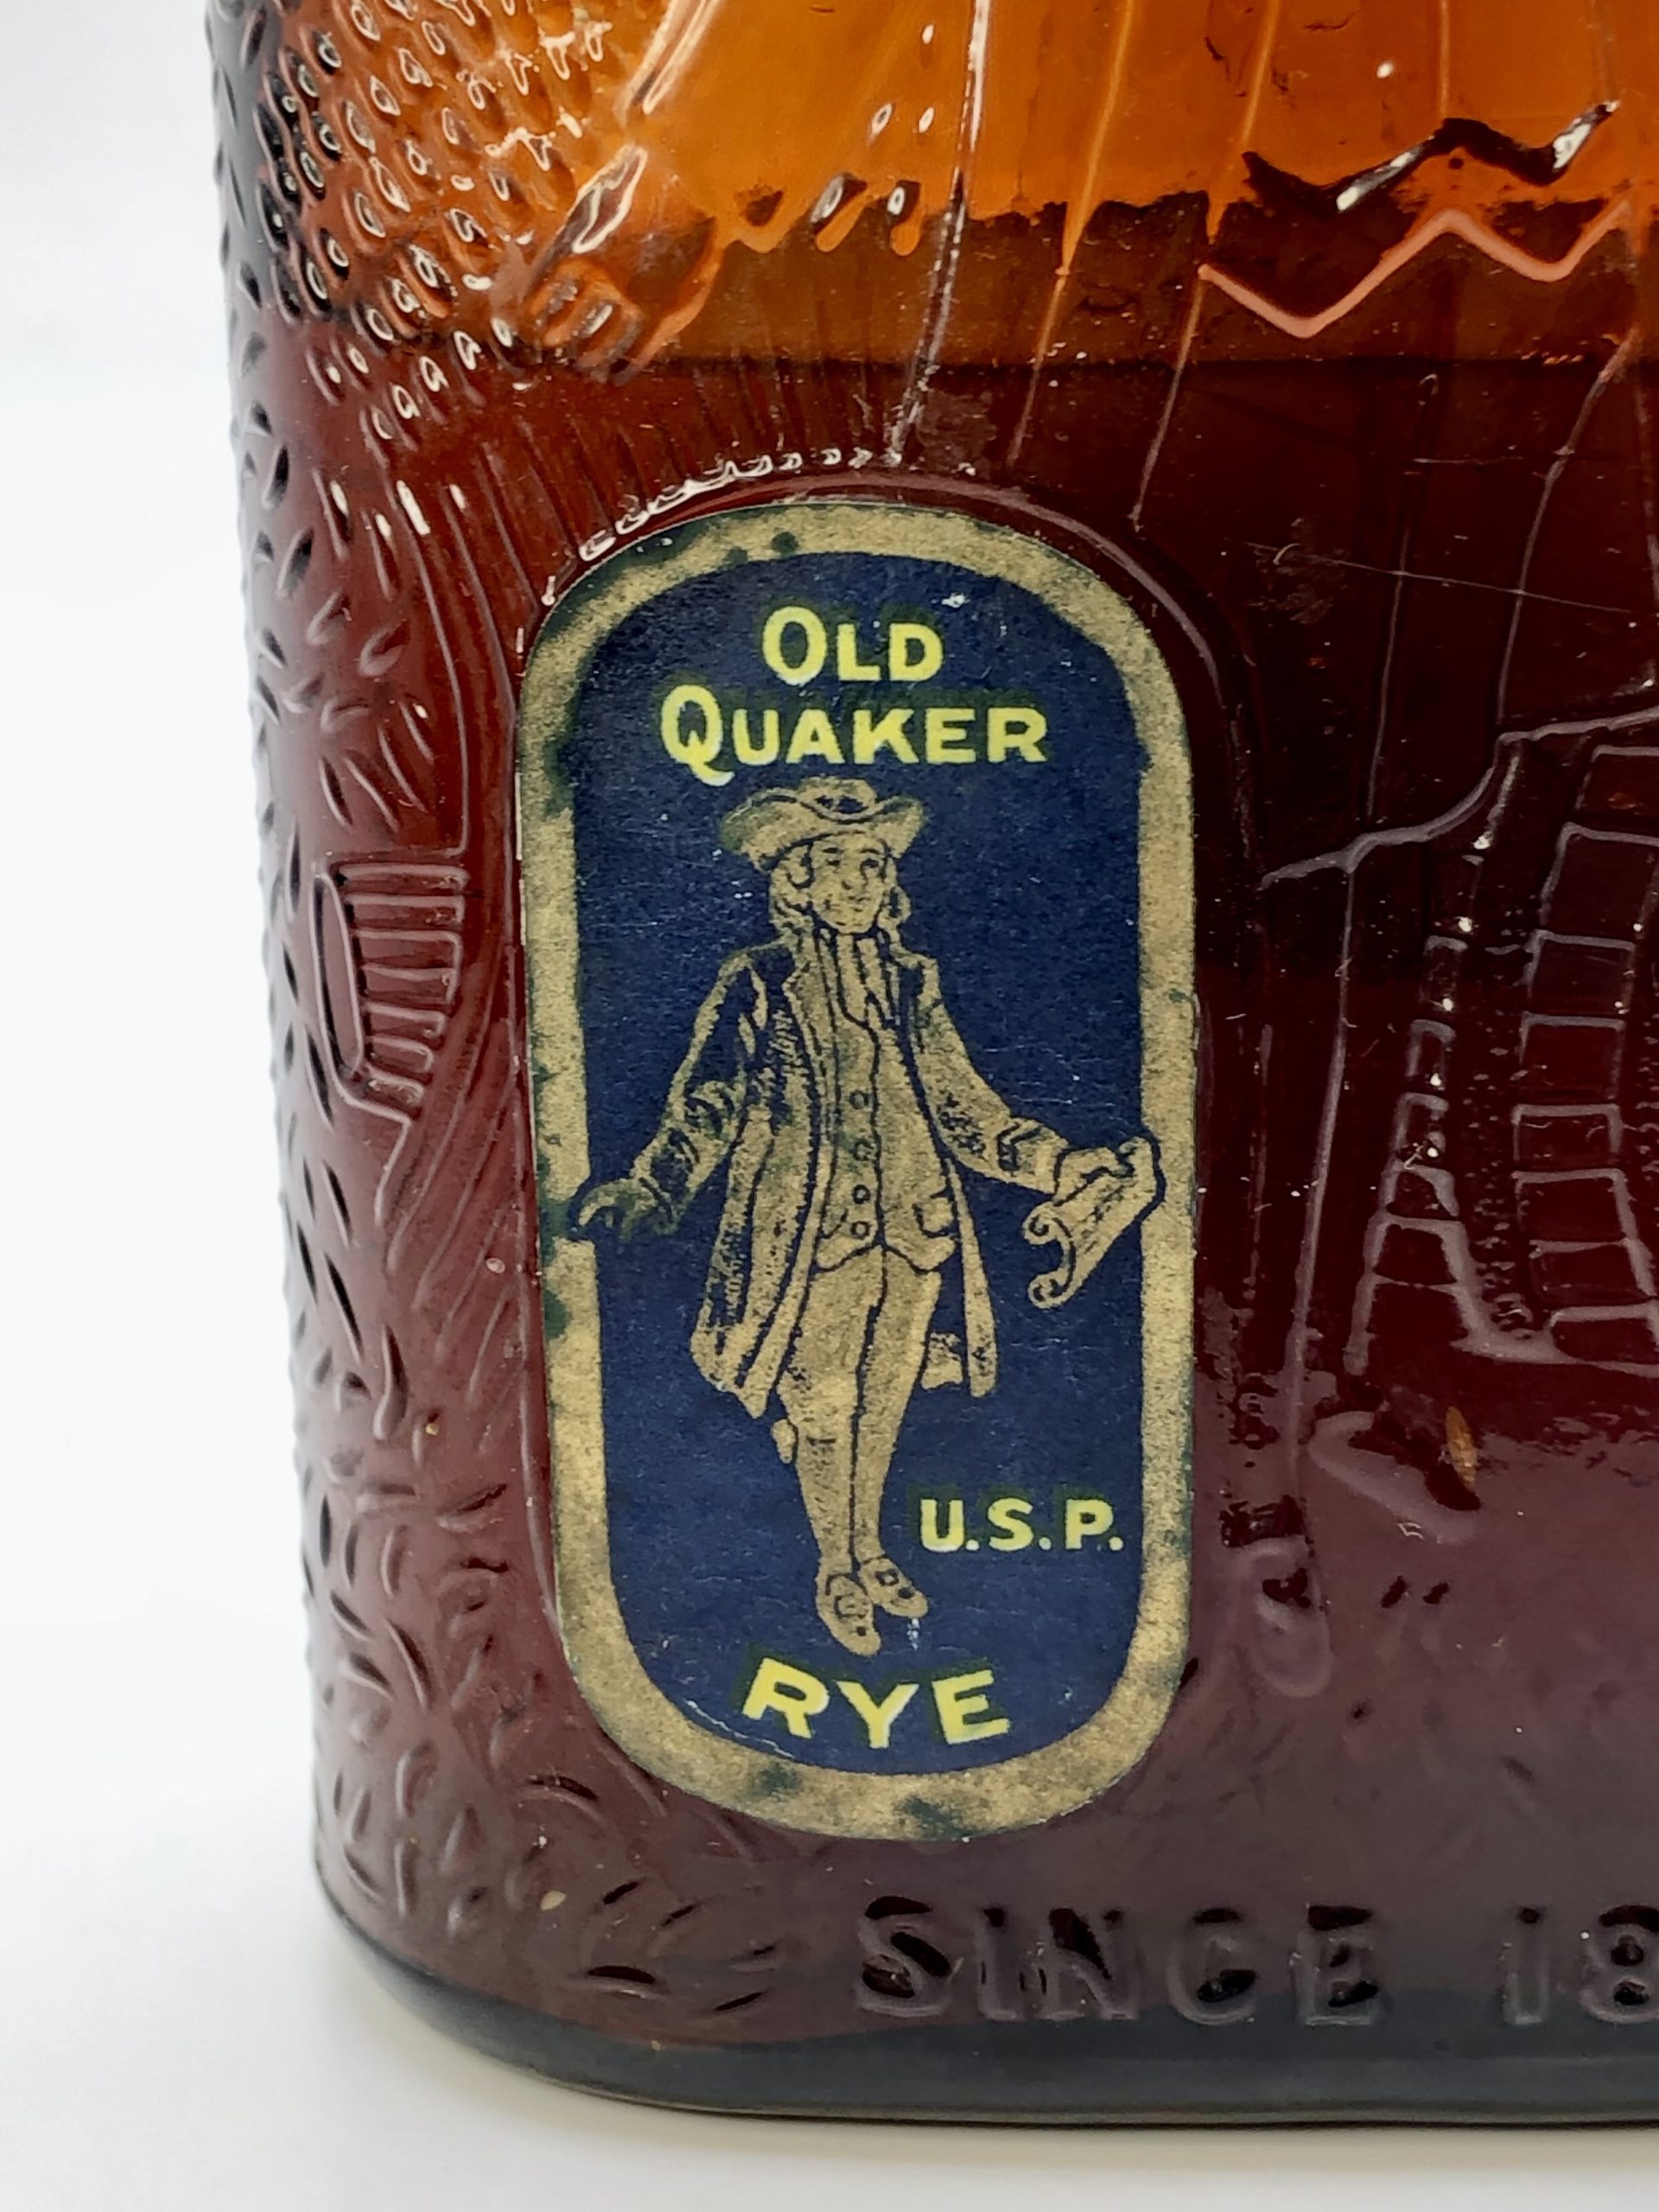 https://whiskeybent.net/wp-content/uploads/Old-Quaker-Rye-Whiskey-Front-Detail-scaled.jpeg